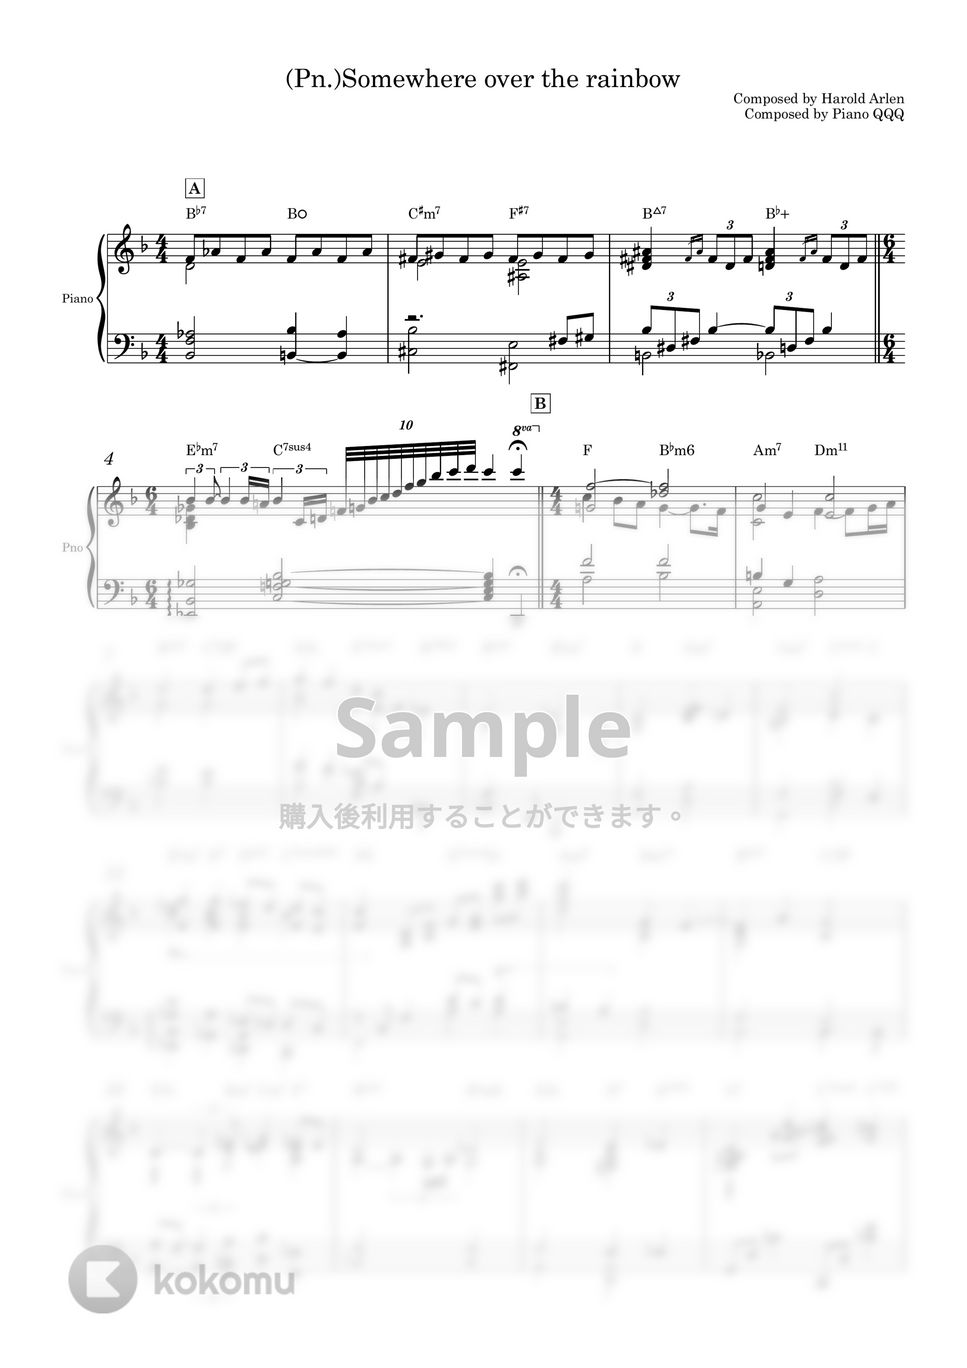 Harold Arlen - Somewhere over the rainbow (デュエット/ピアノと楽器) by Piano QQQ